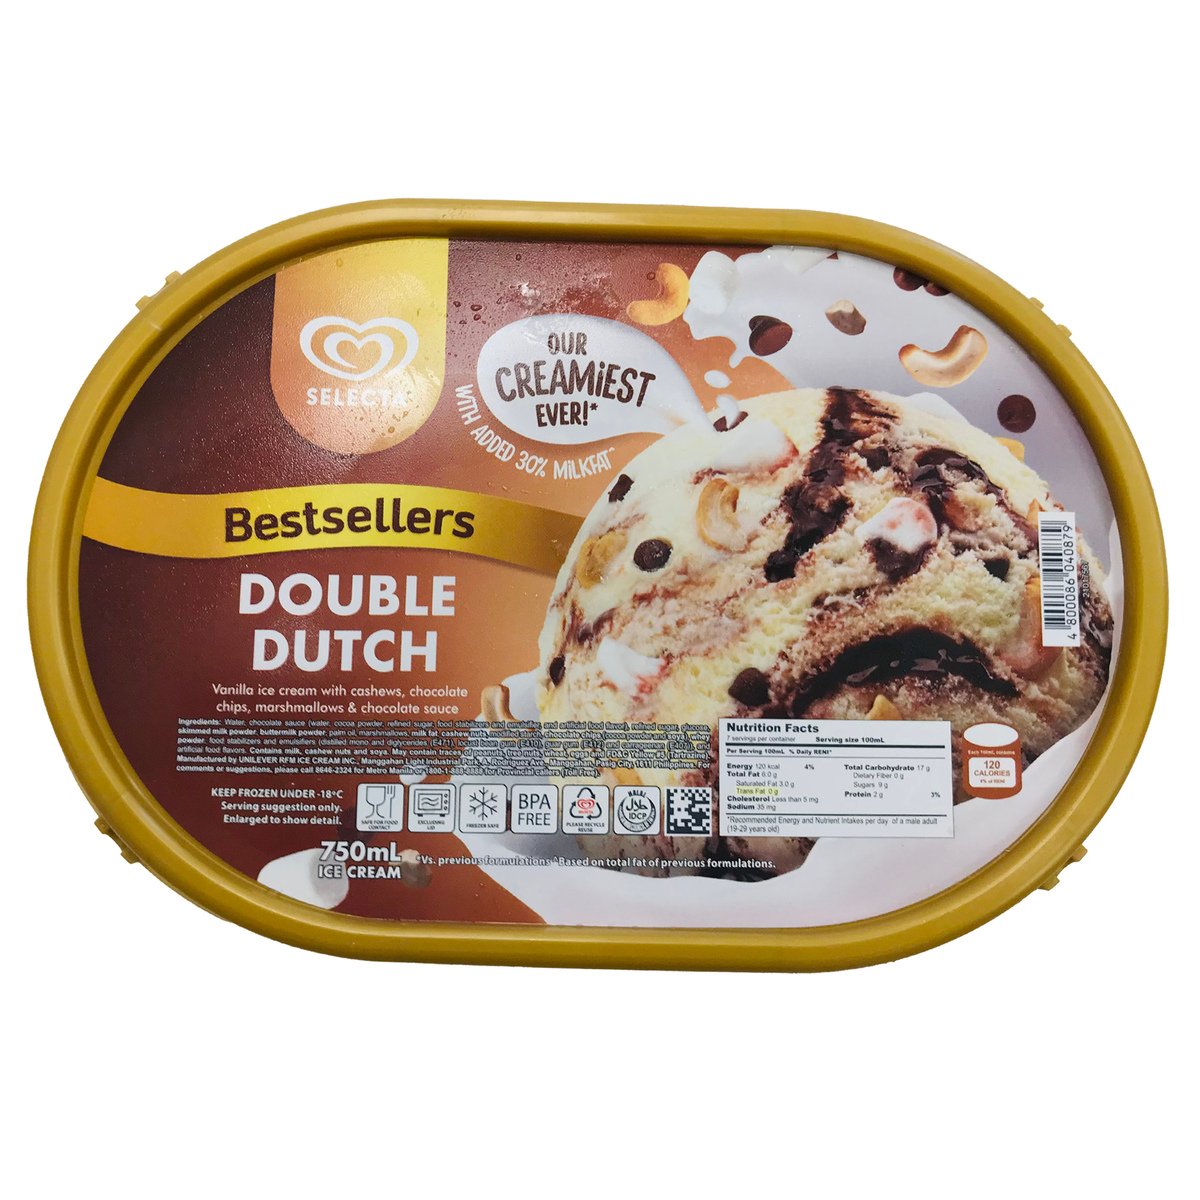 اشتري قم بشراء سيليكتا دبل دوتش آيسكريم 750 مل Online at Best Price من الموقع - من لولو هايبر ماركت Ice Cream Take Home في الامارات